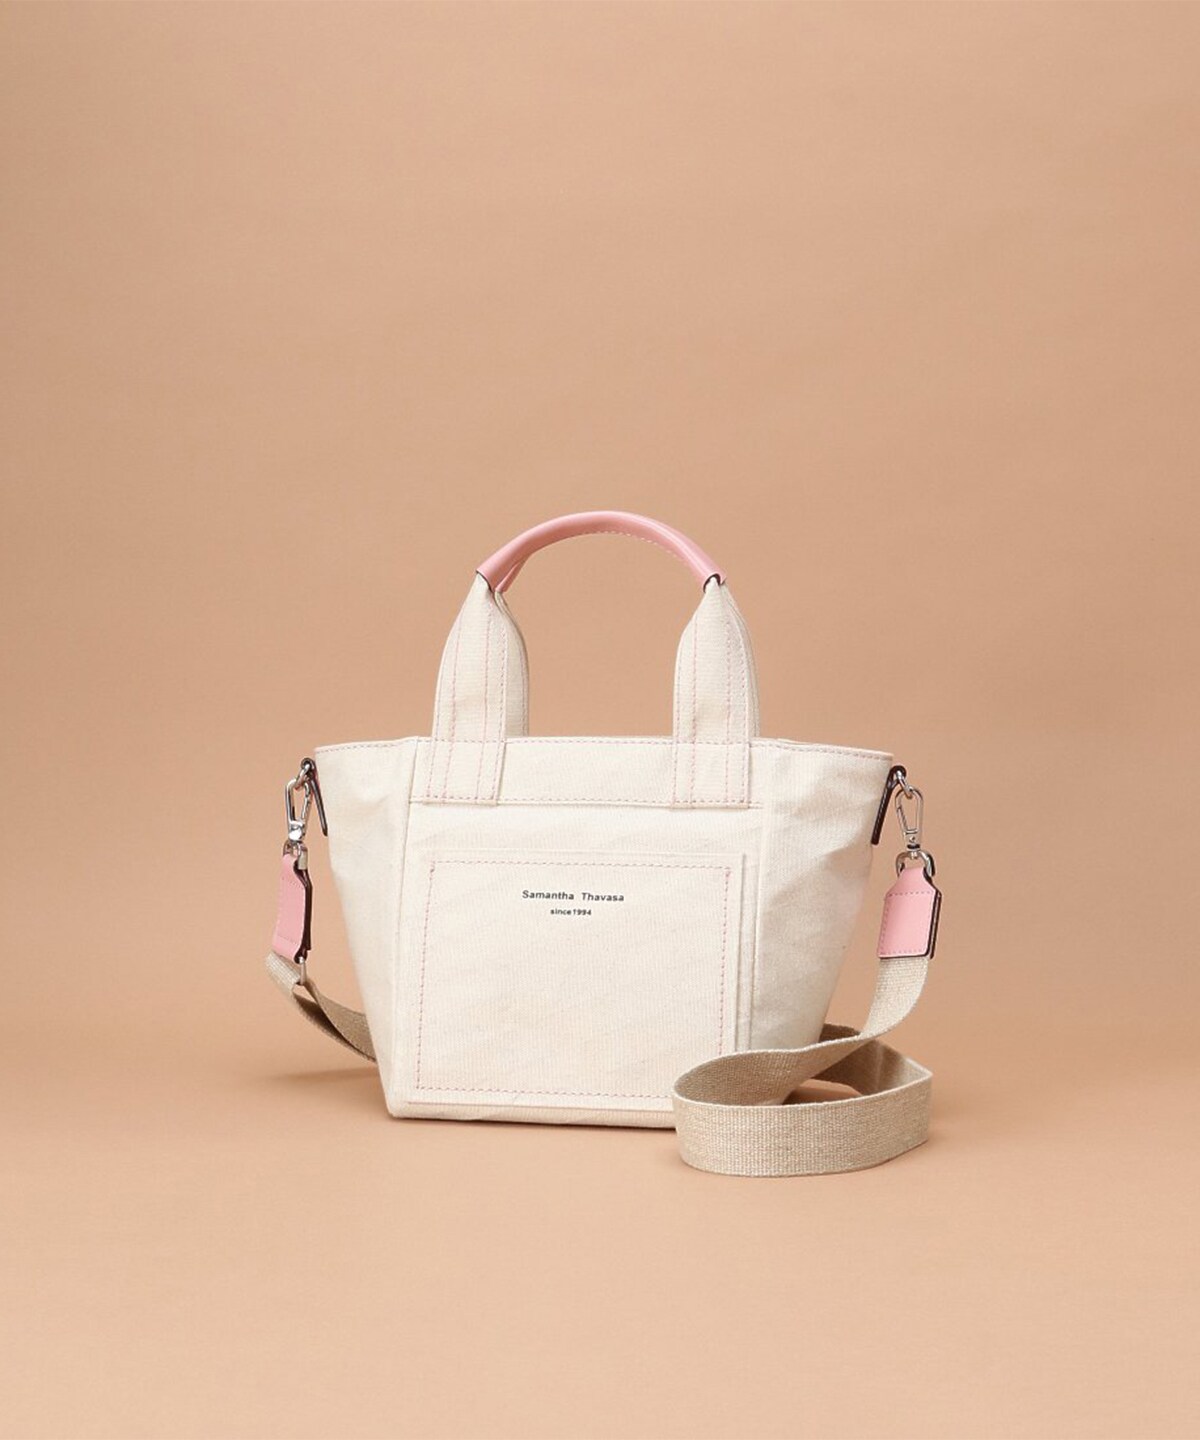 Dream bag for キャンバストートⅡ 小サイズ